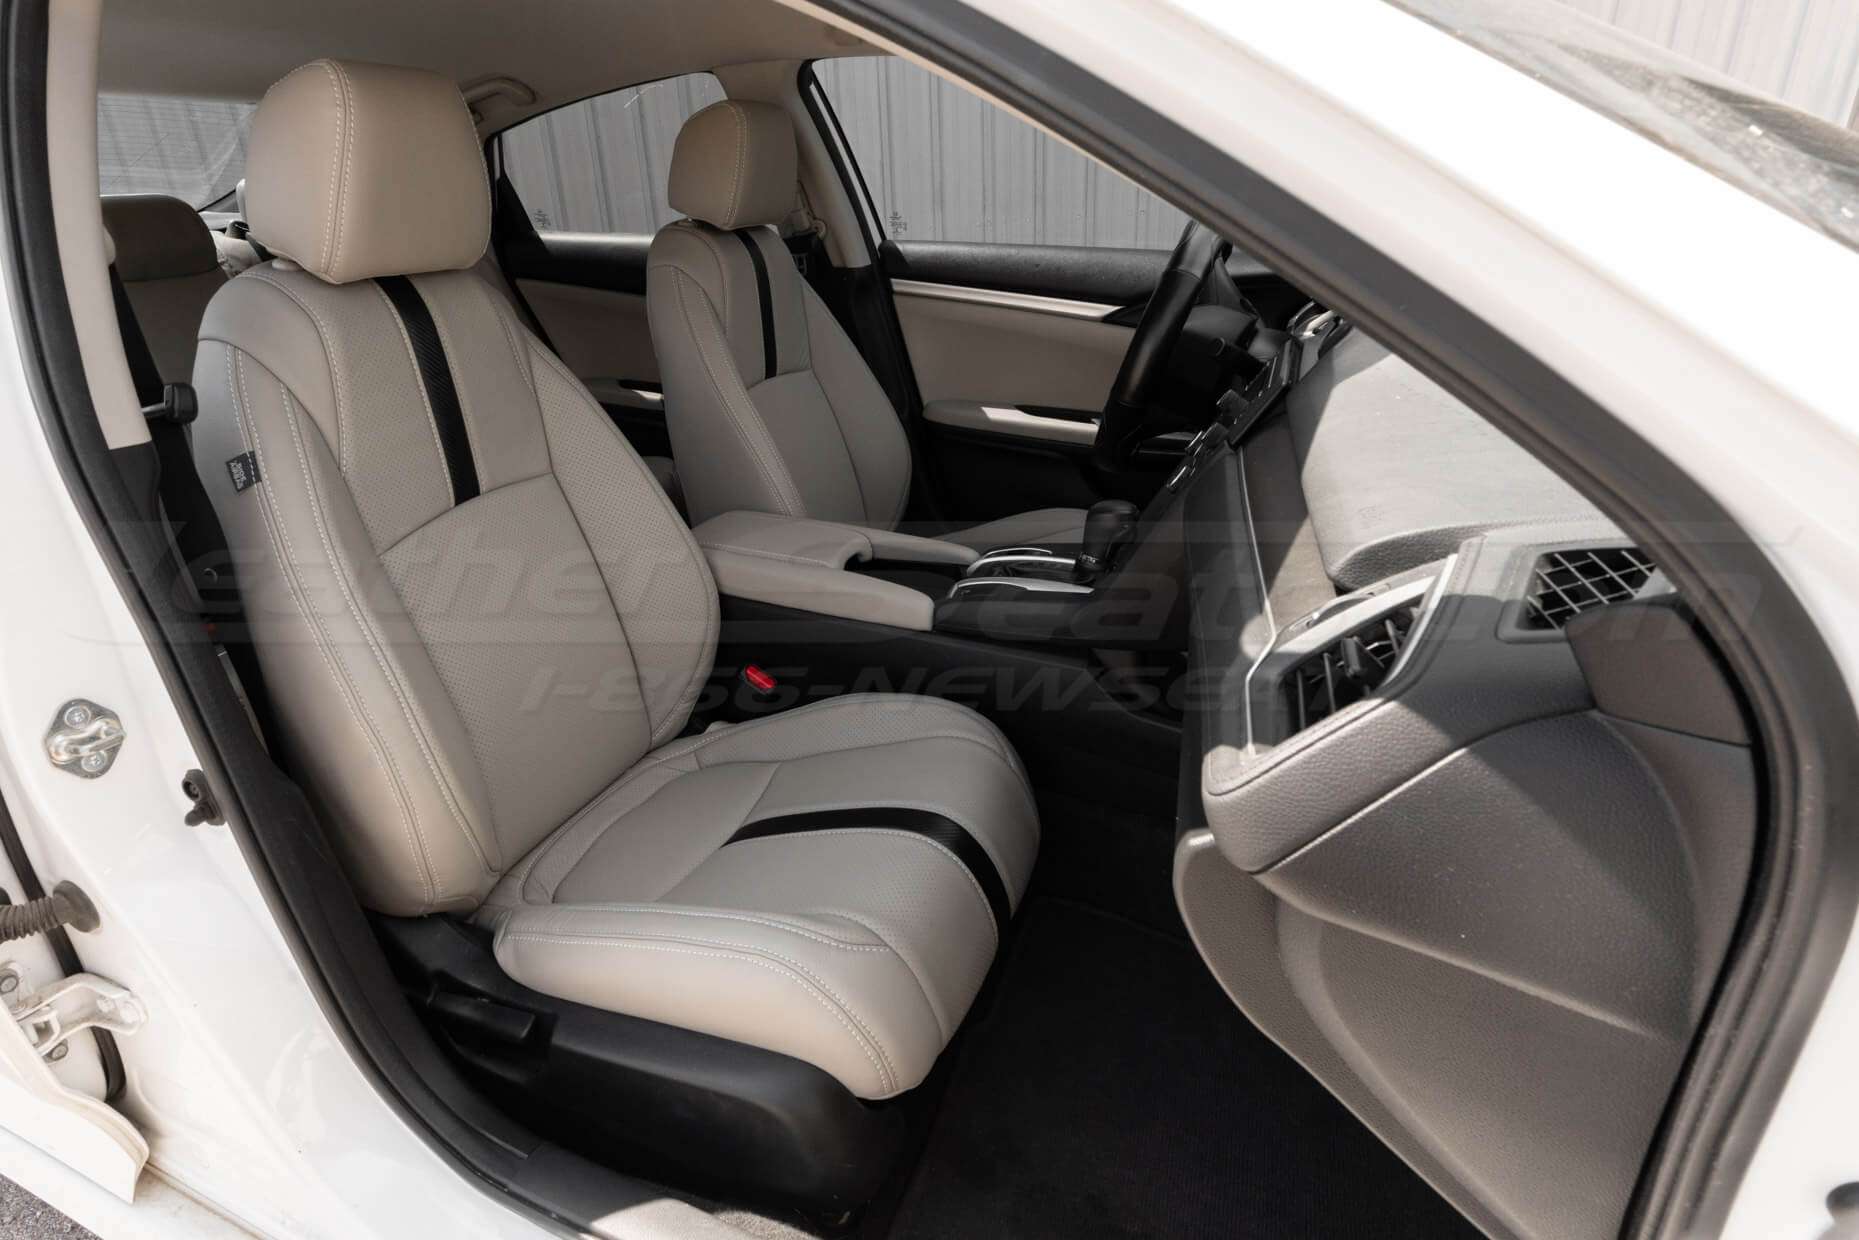 Honda Civic Sedan with Custom installed leather seats - front passenger